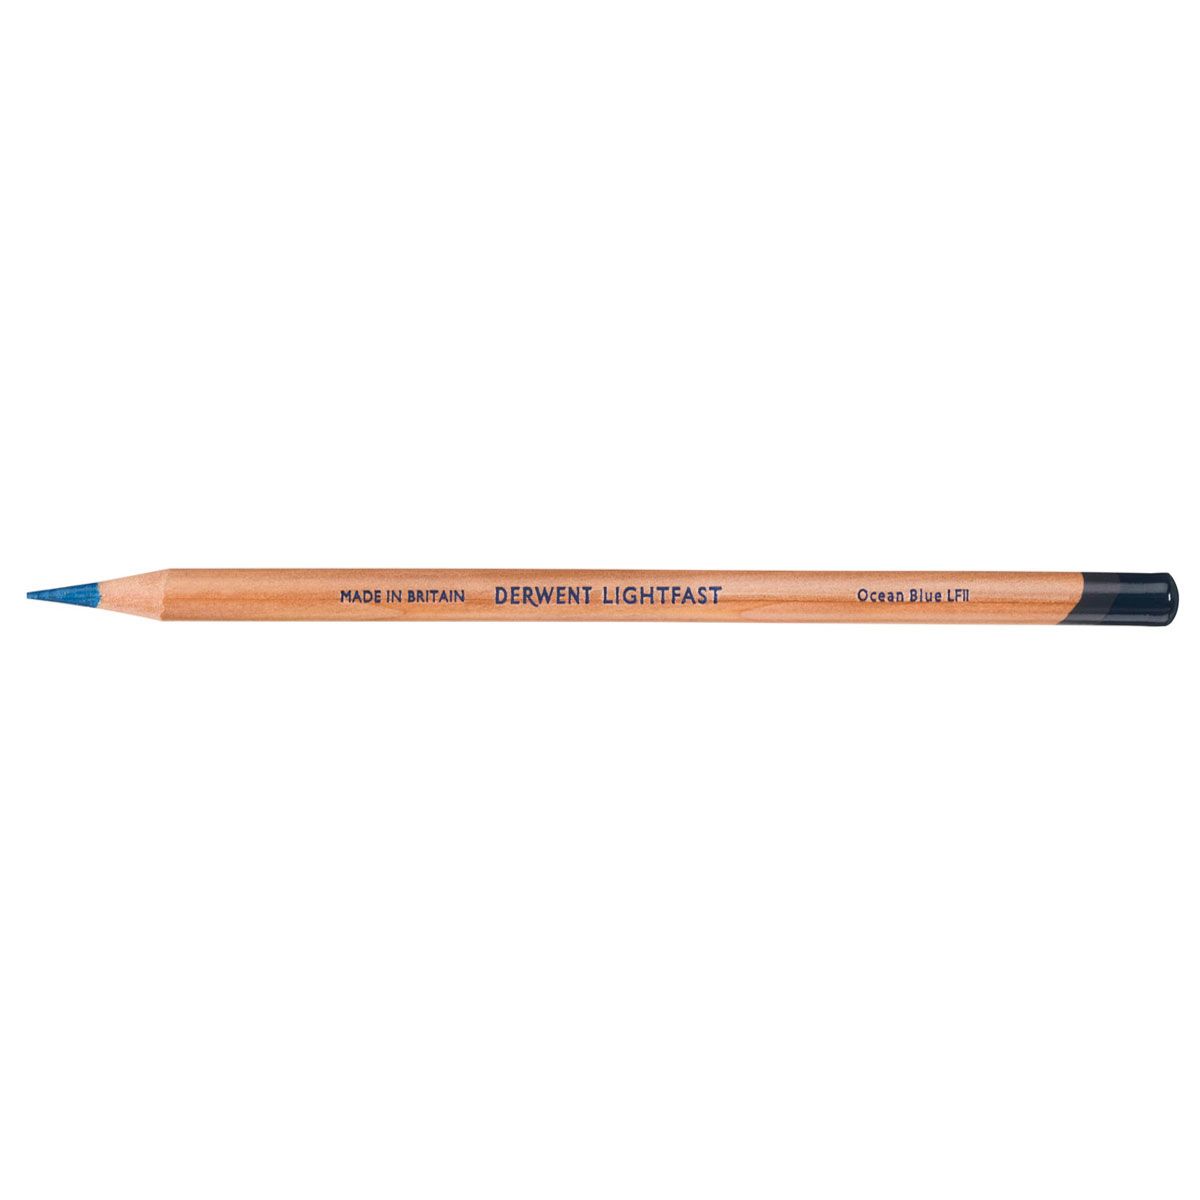 NEW Derwent Lightfast Pencil Colour: Ocean Blue